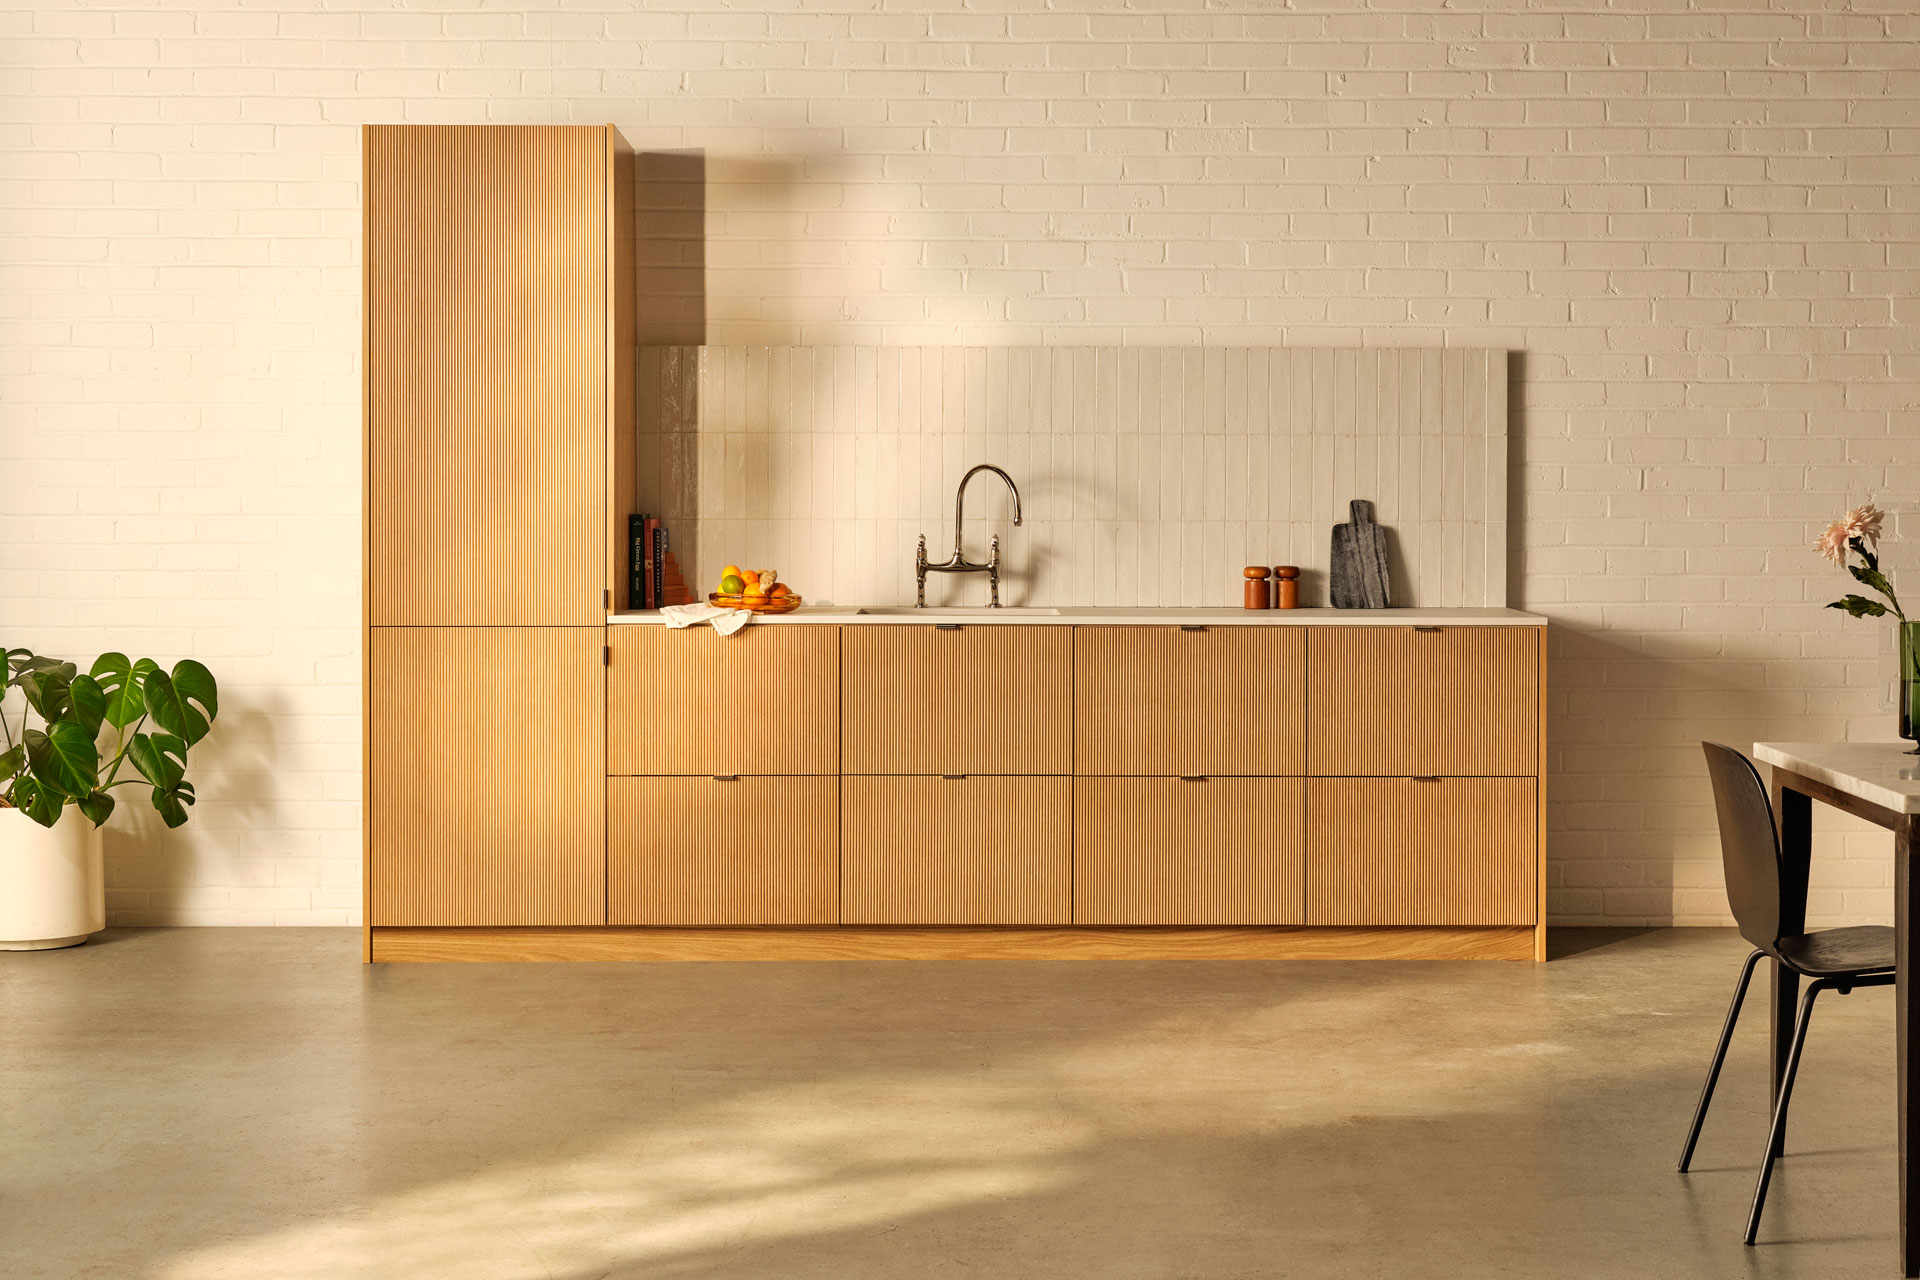 Sleek wooden kitchen with concrete floor